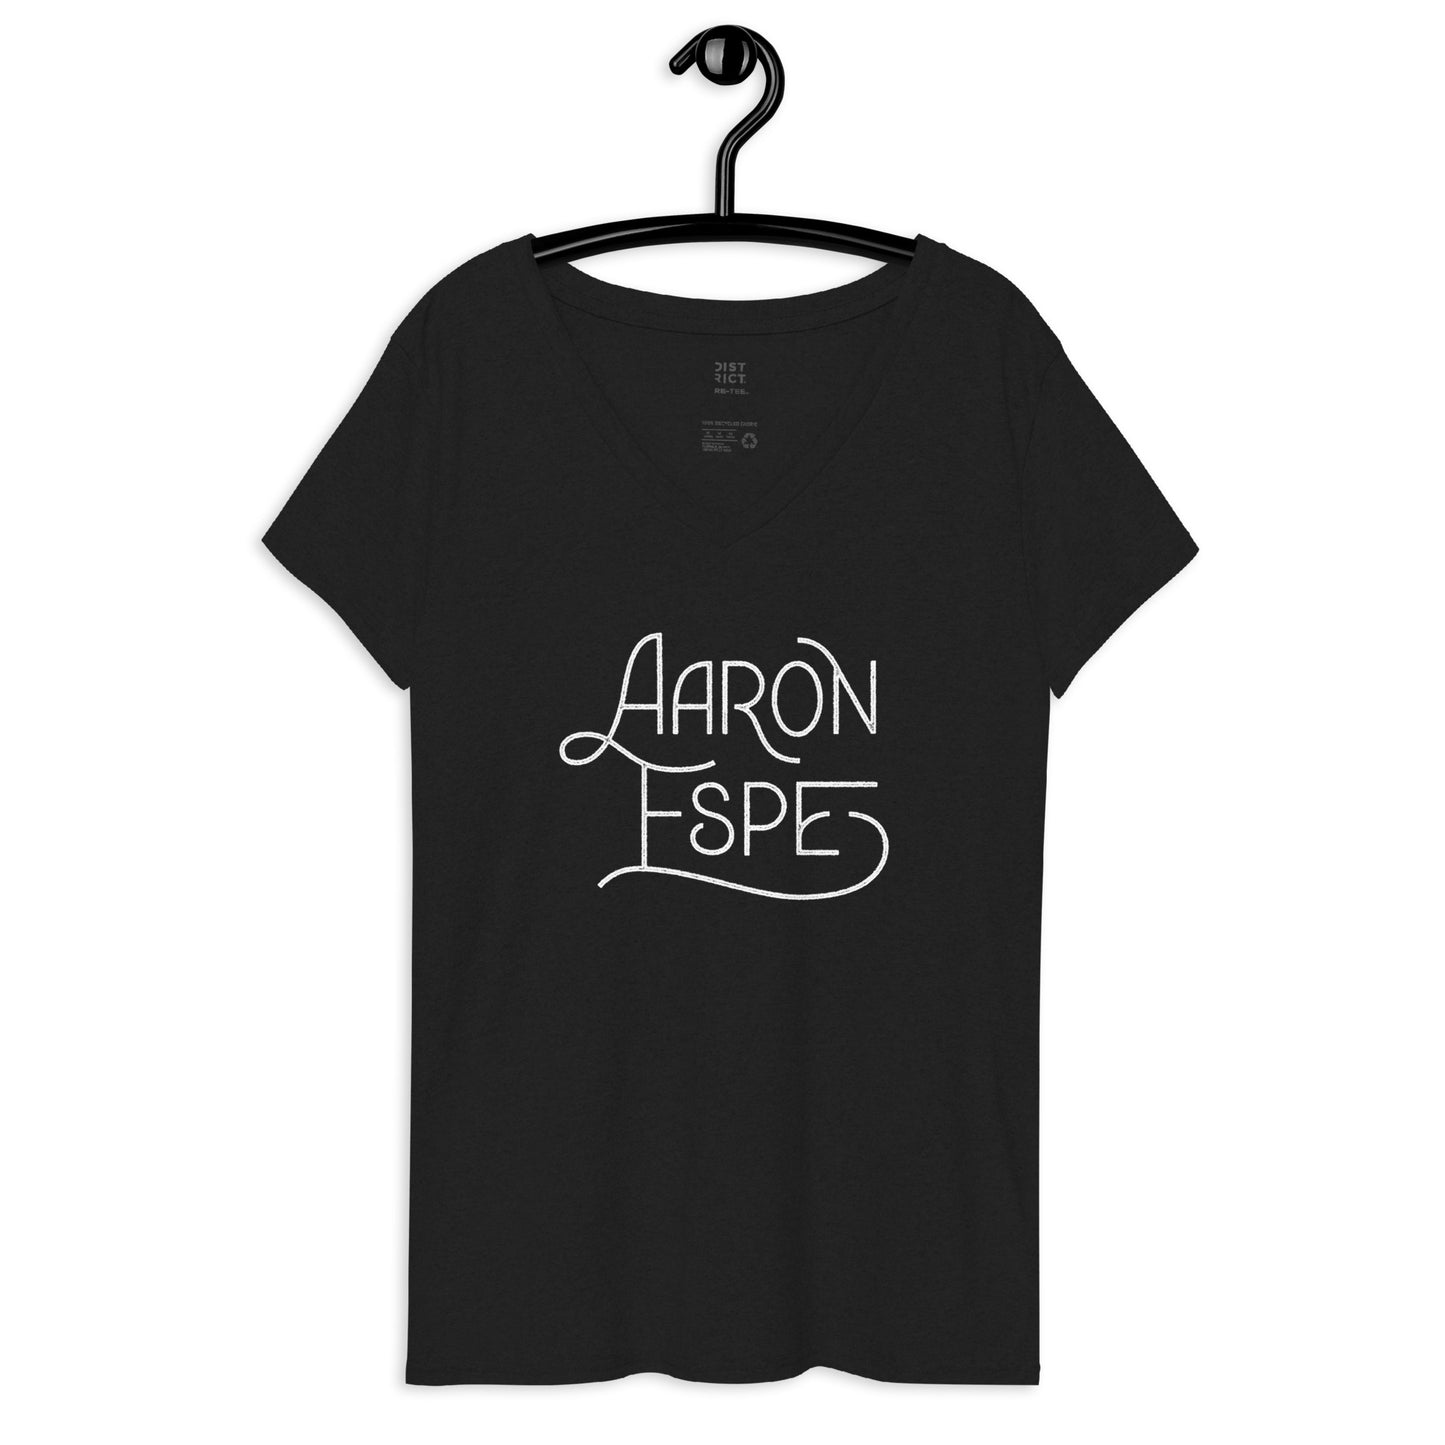 Women’s V-Neck T-Shirt Aaron Espe Logo